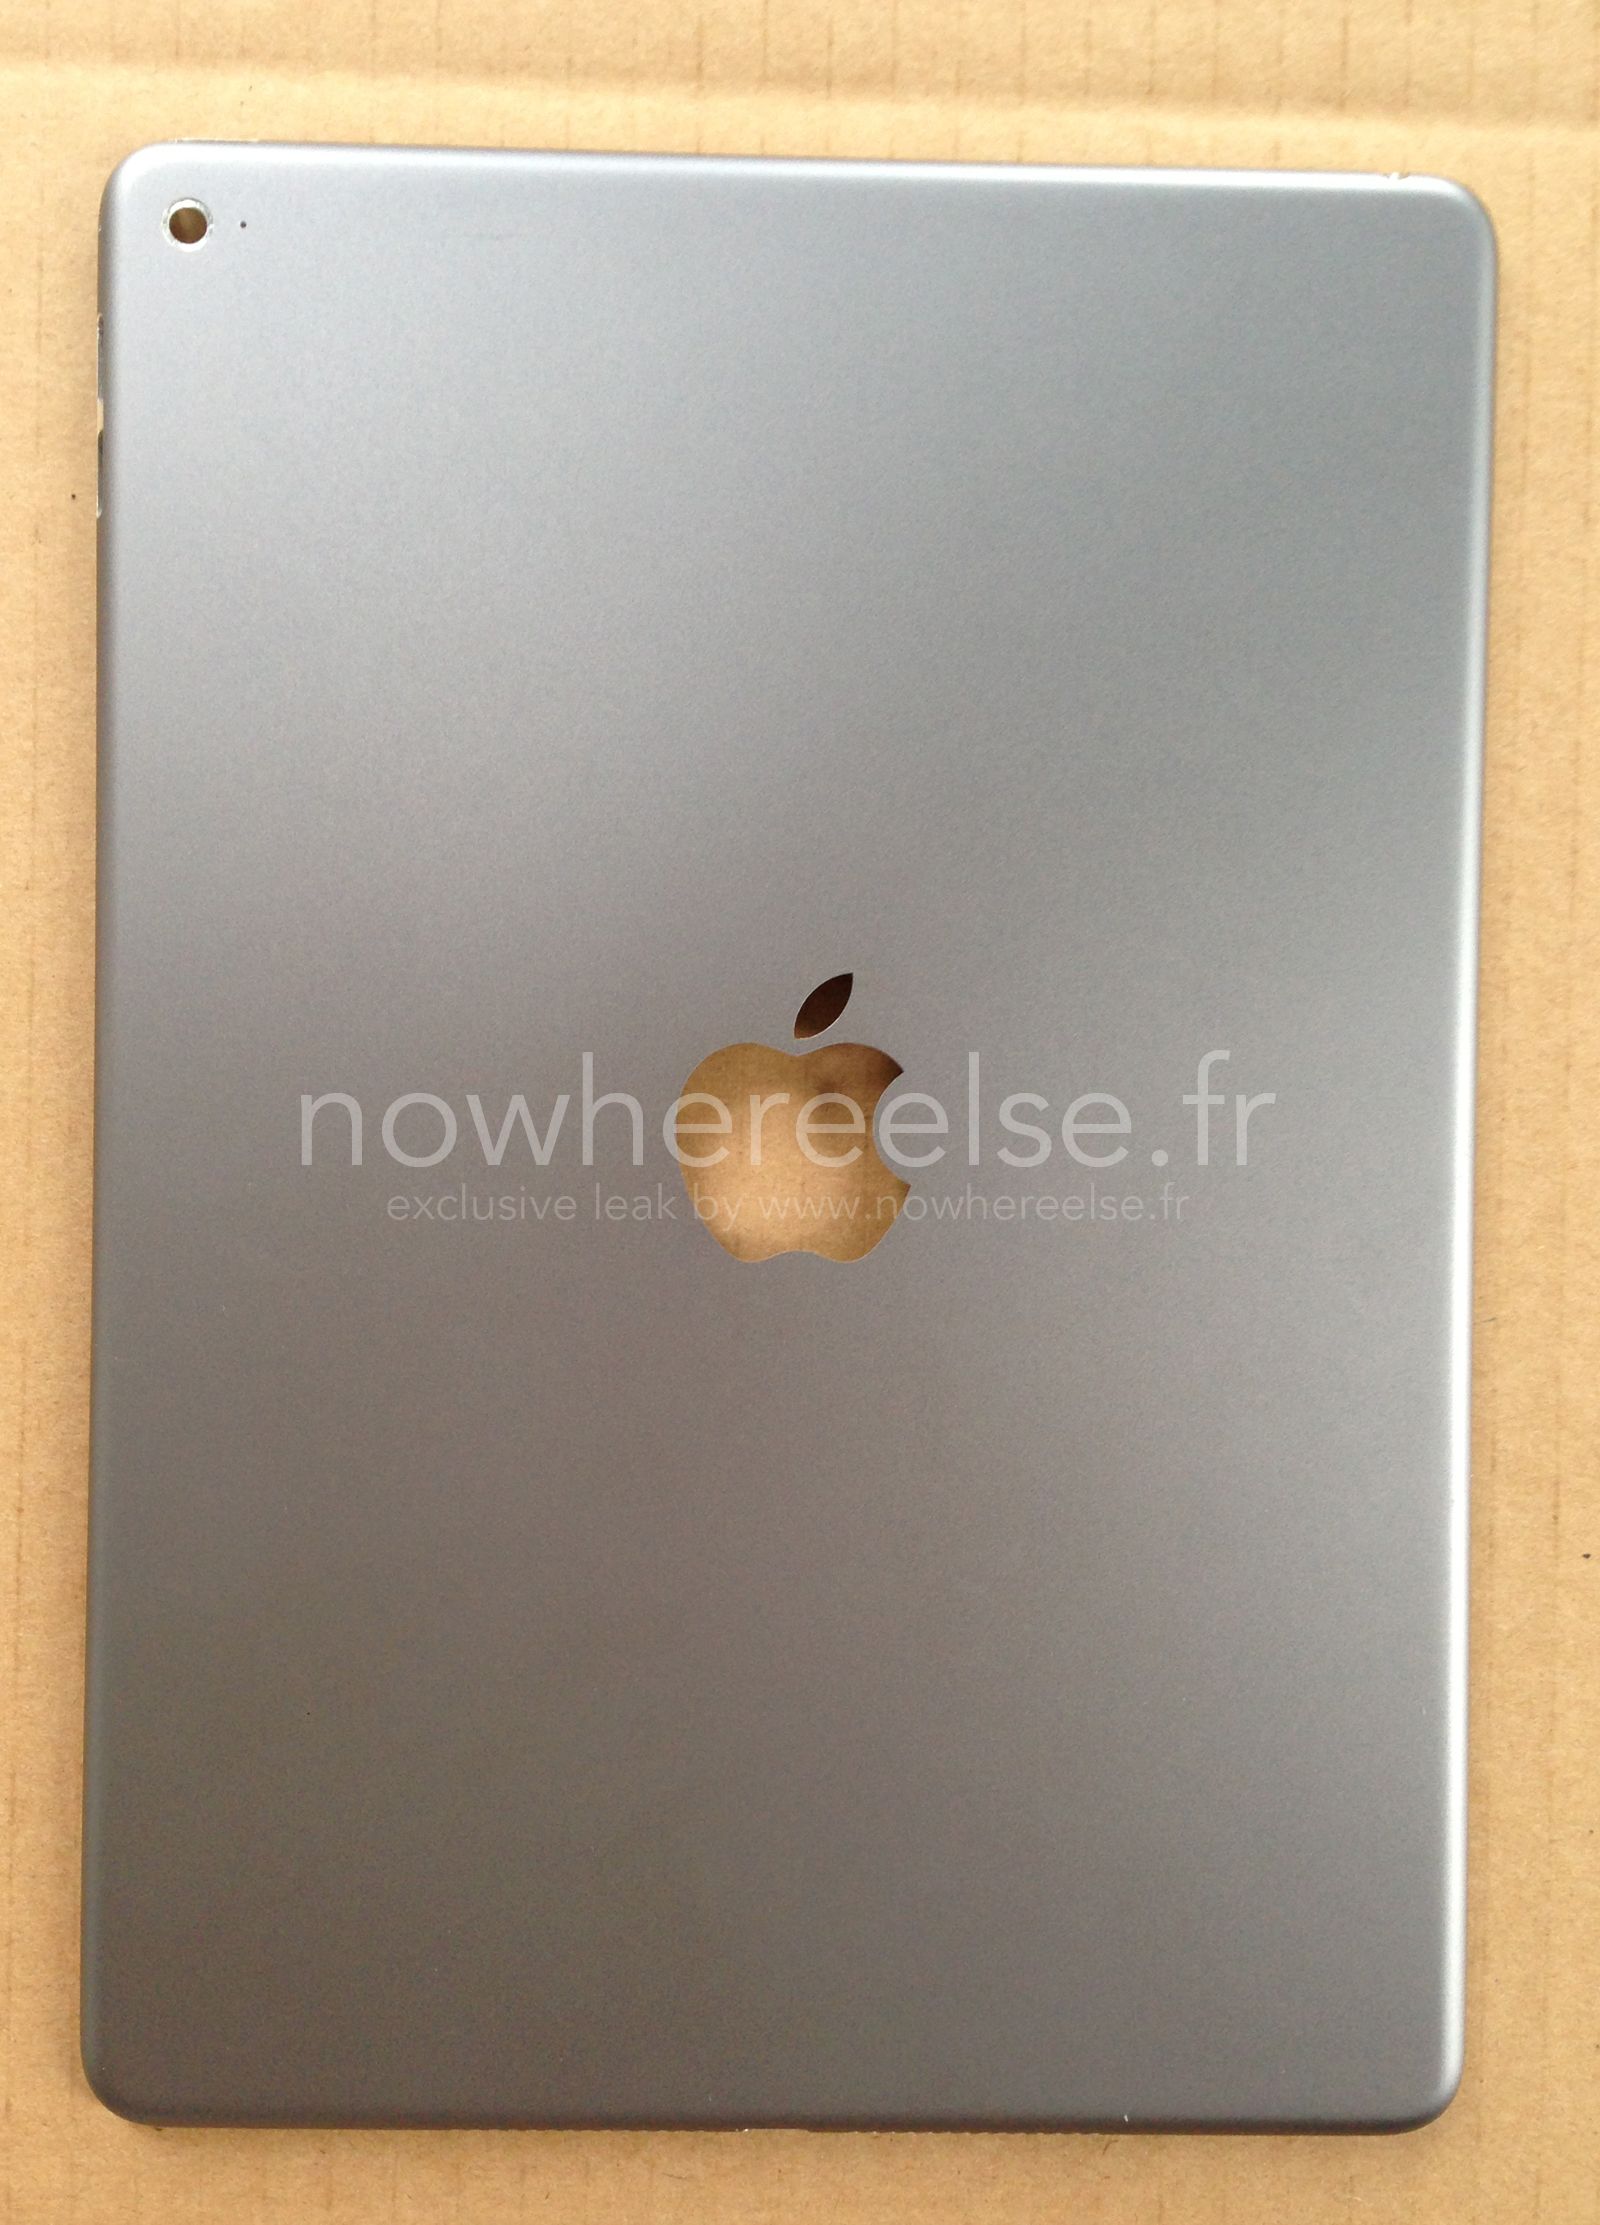 iPad-Air-2-rear-panel-Nowhere-Else-001.jpg